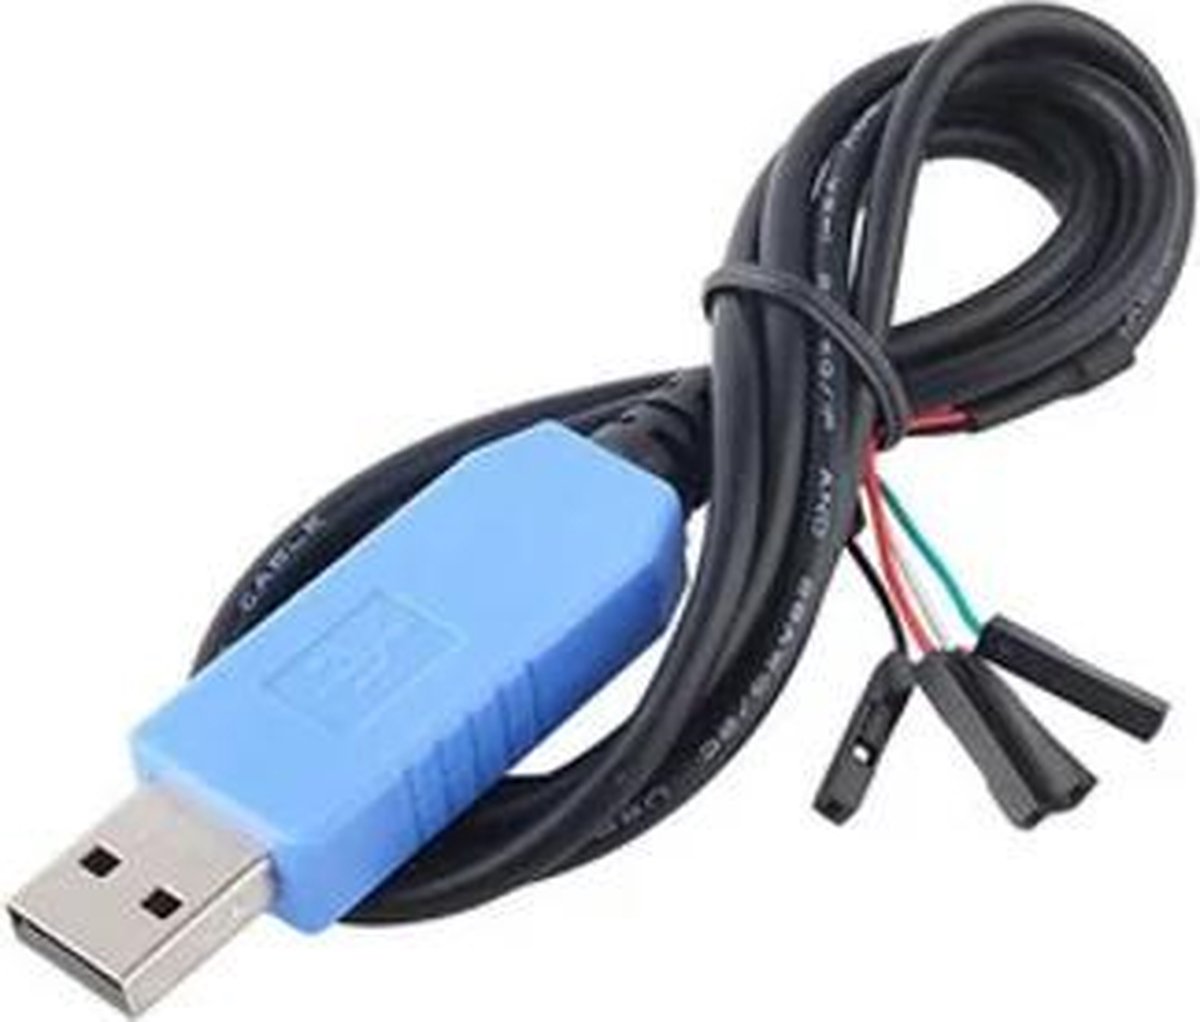 OTRONIC® USB vers TTL RS323 Dupont Femelle PL2303